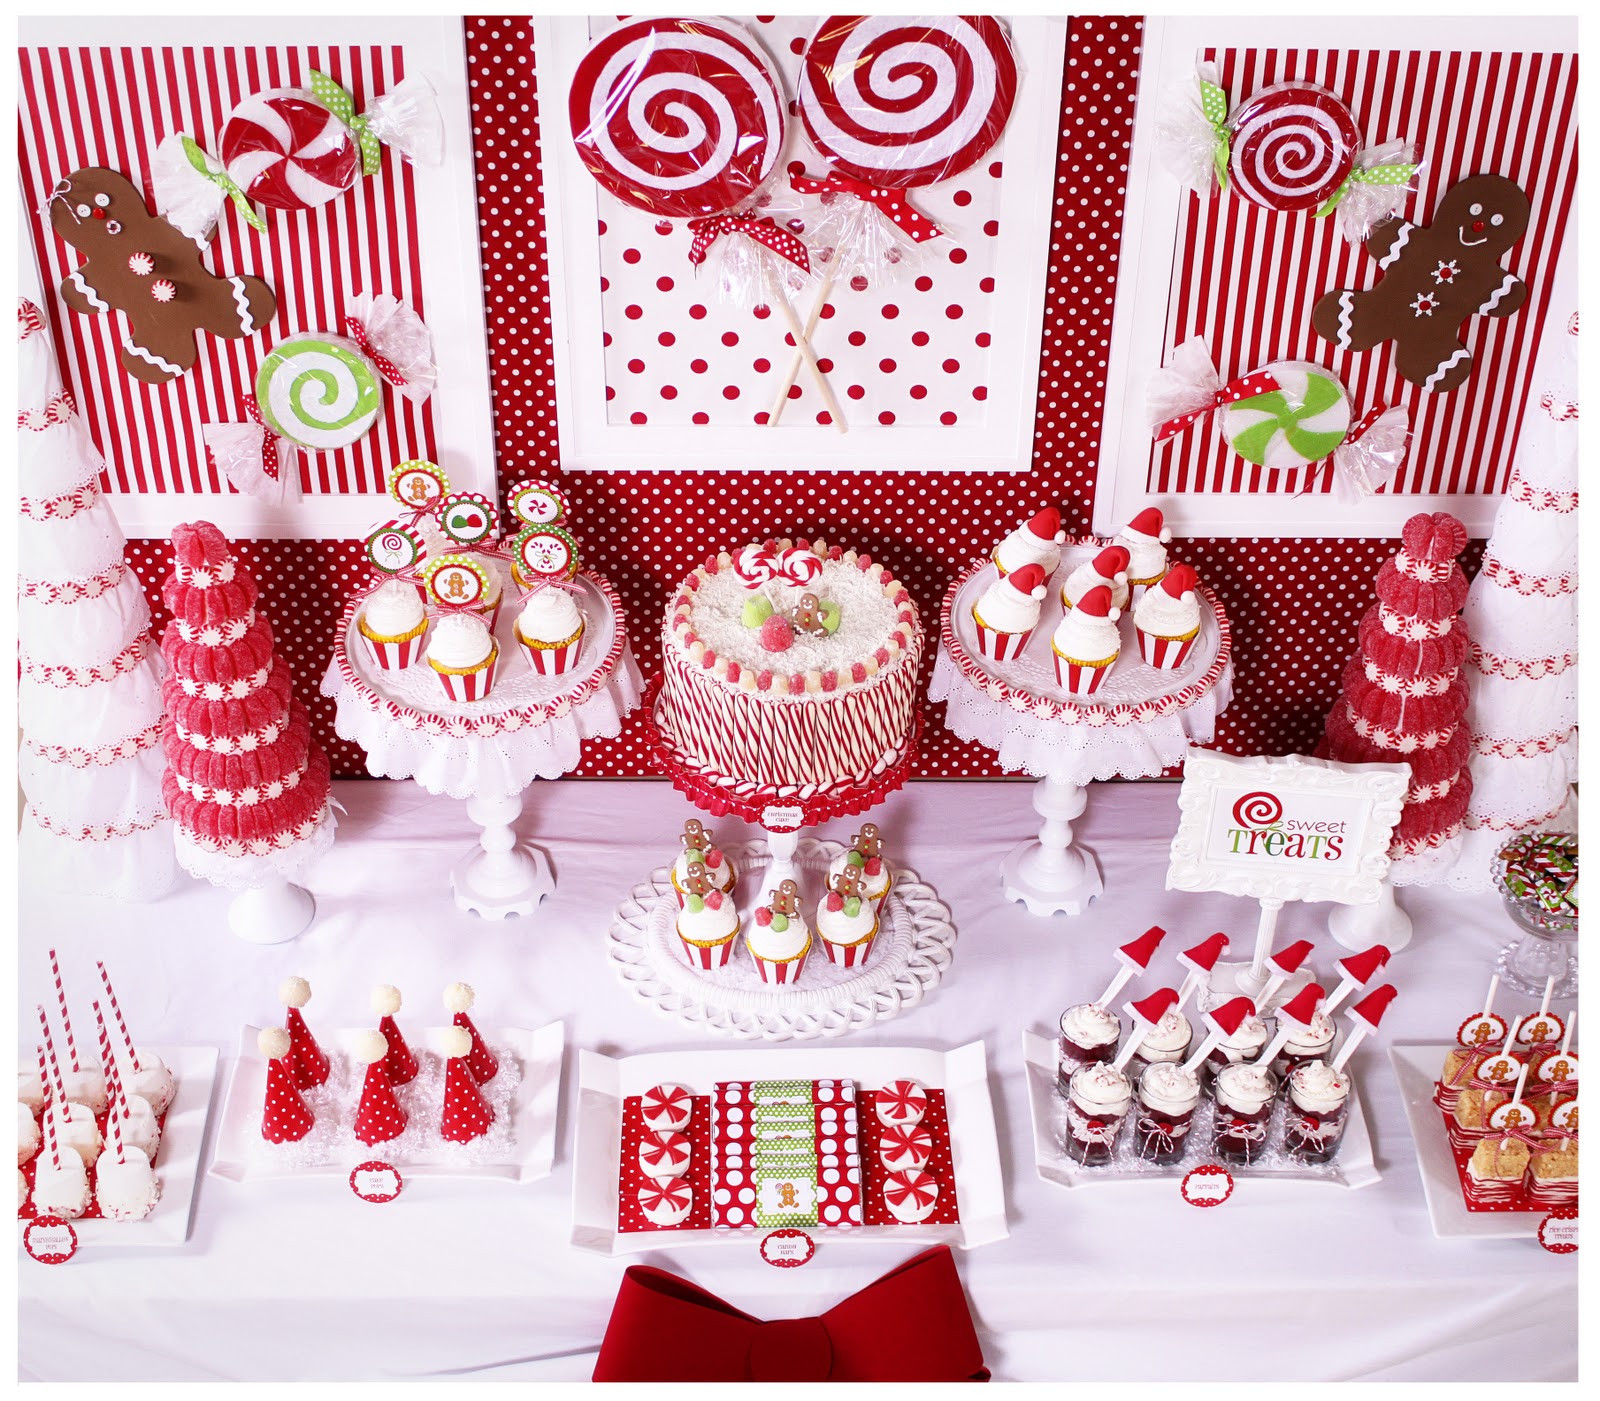 Christmas Party Theme Ideas For Adults
 Kara s Party Ideas Candy Land Christmas Party